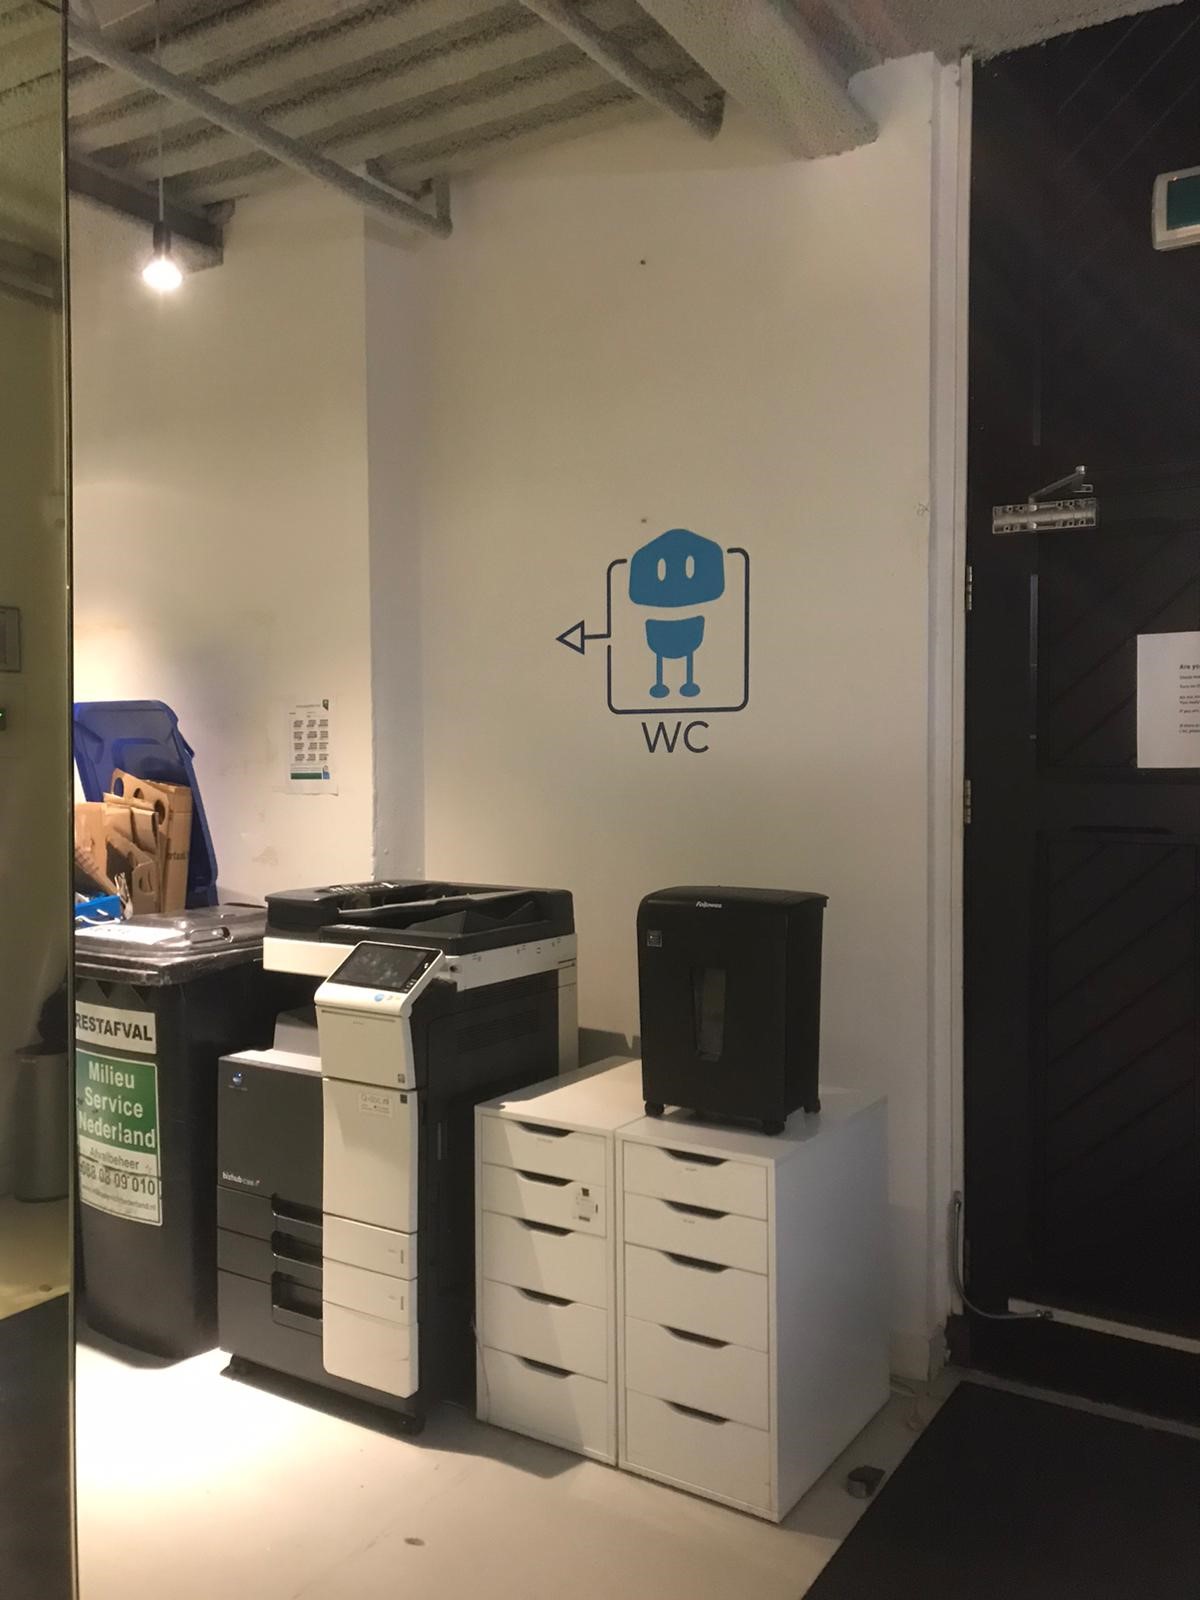 Wall-grip wc signage